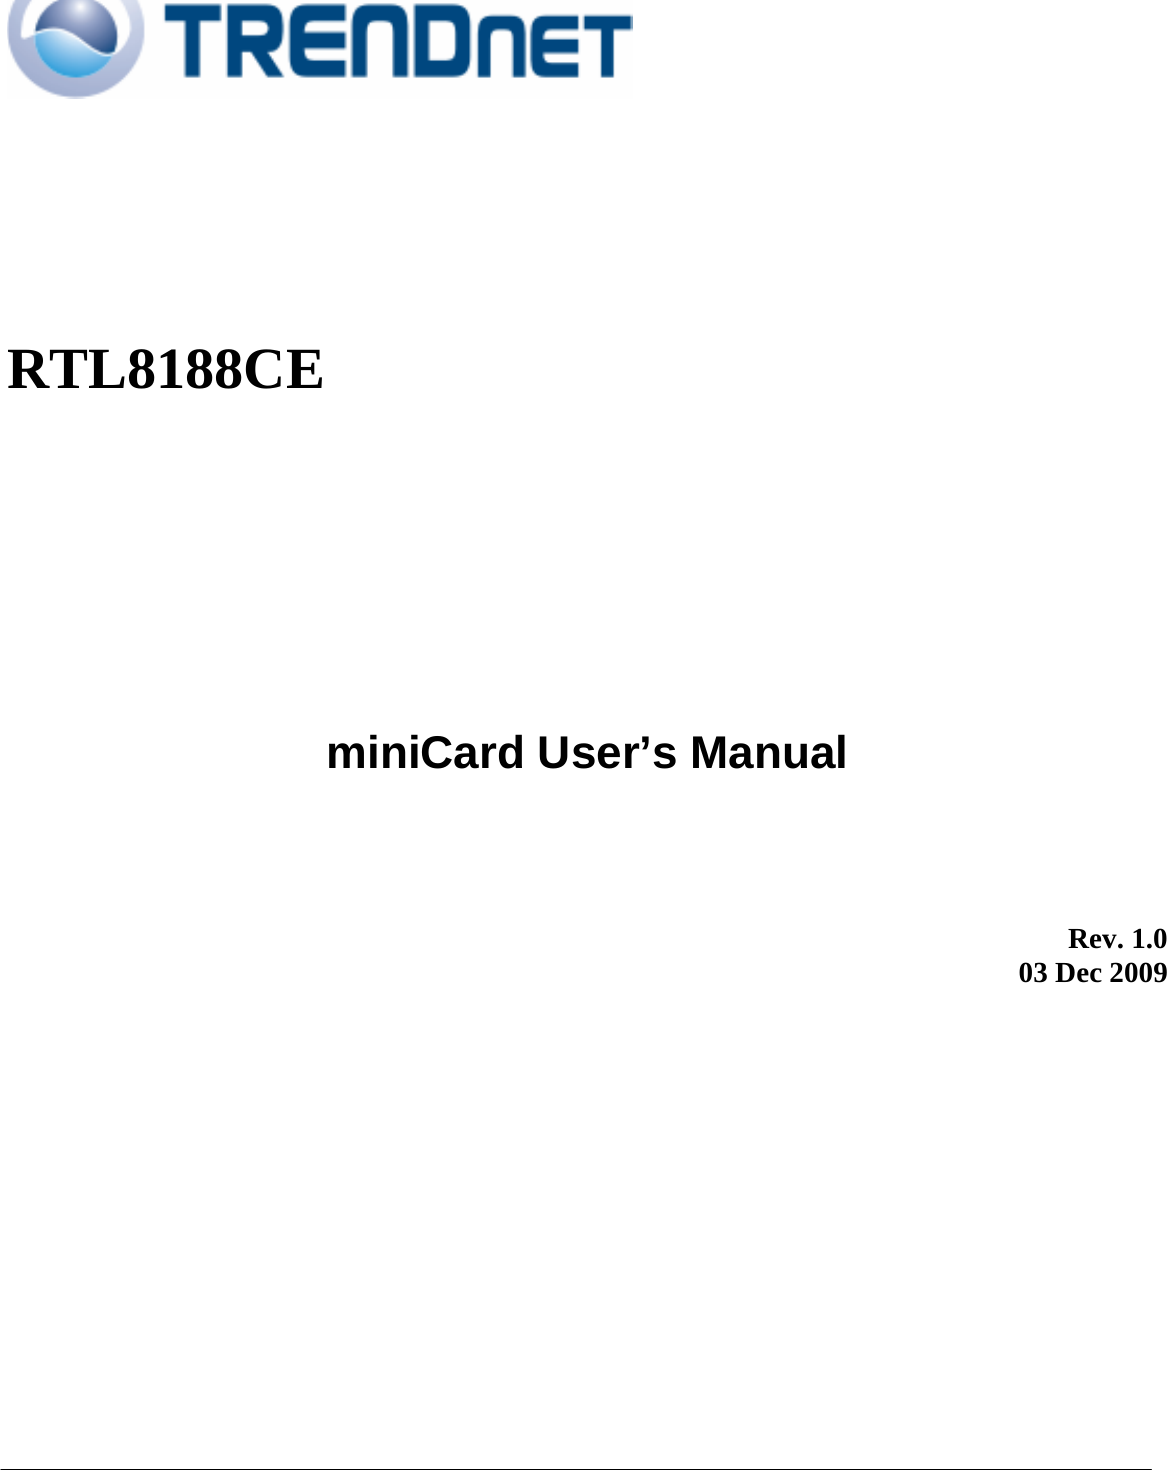                                                                                                                                                     RTL8188CE                  miniCard User’s Manual           Rev. 1.0 03 Dec 2009      